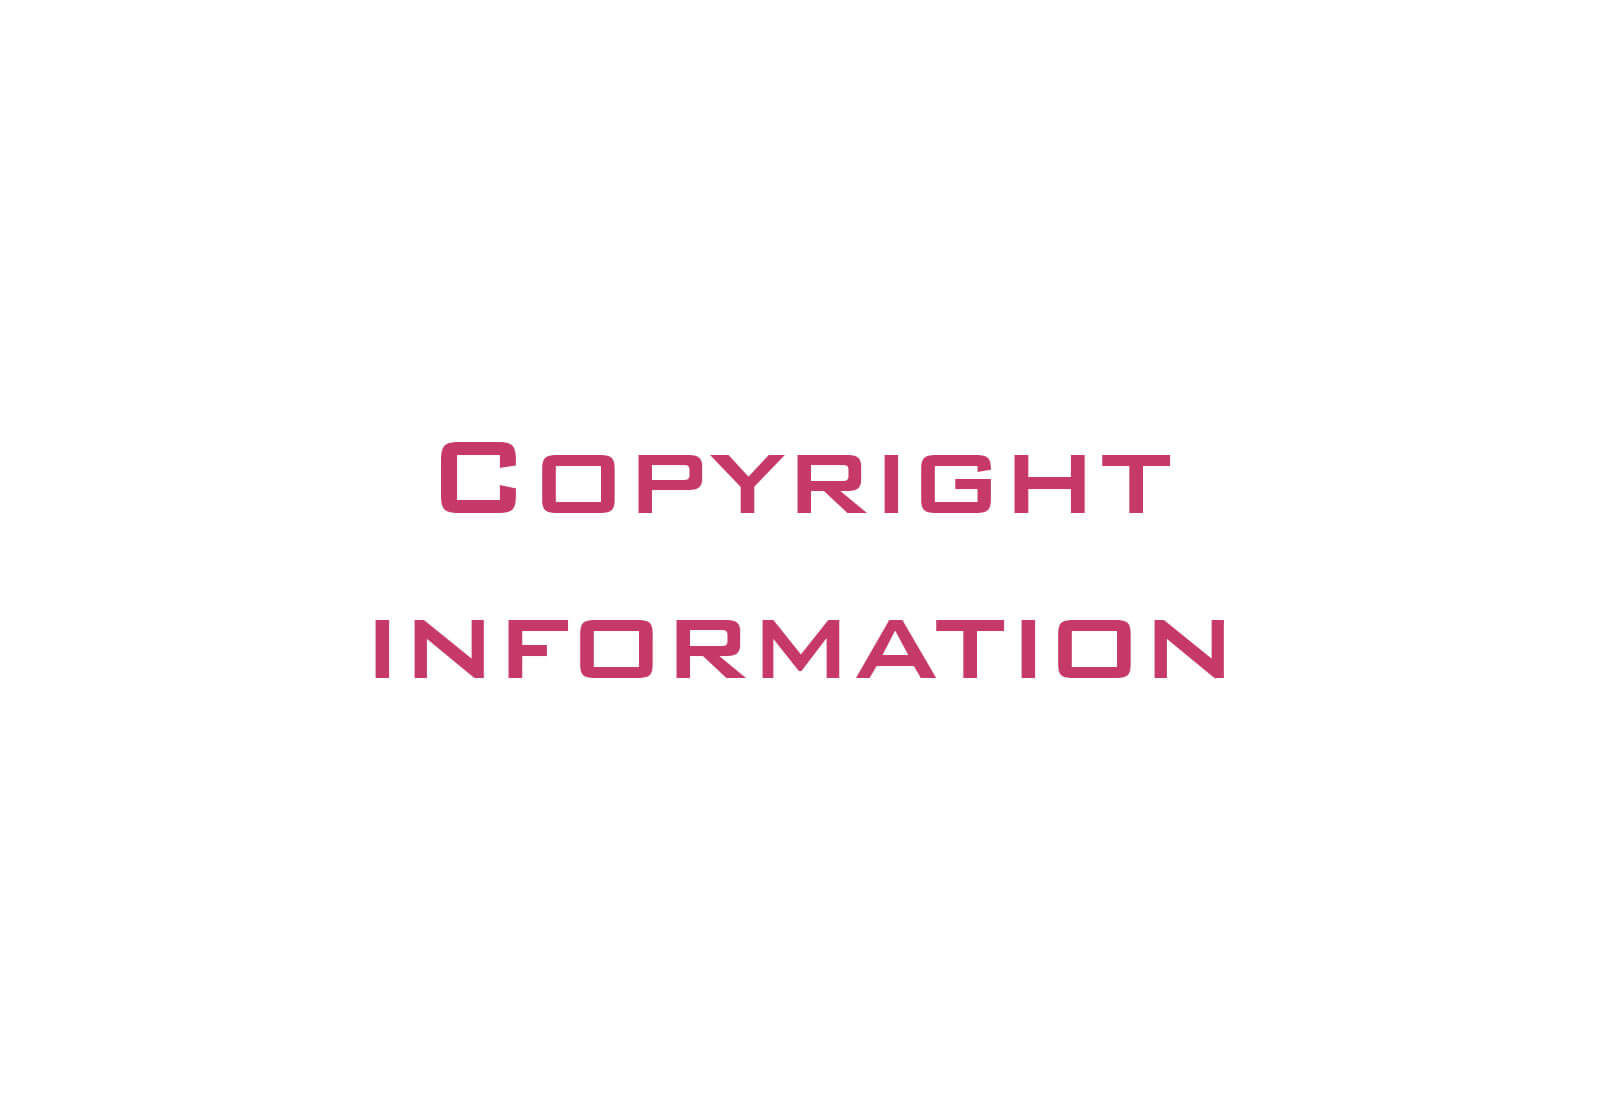 Copyright Information